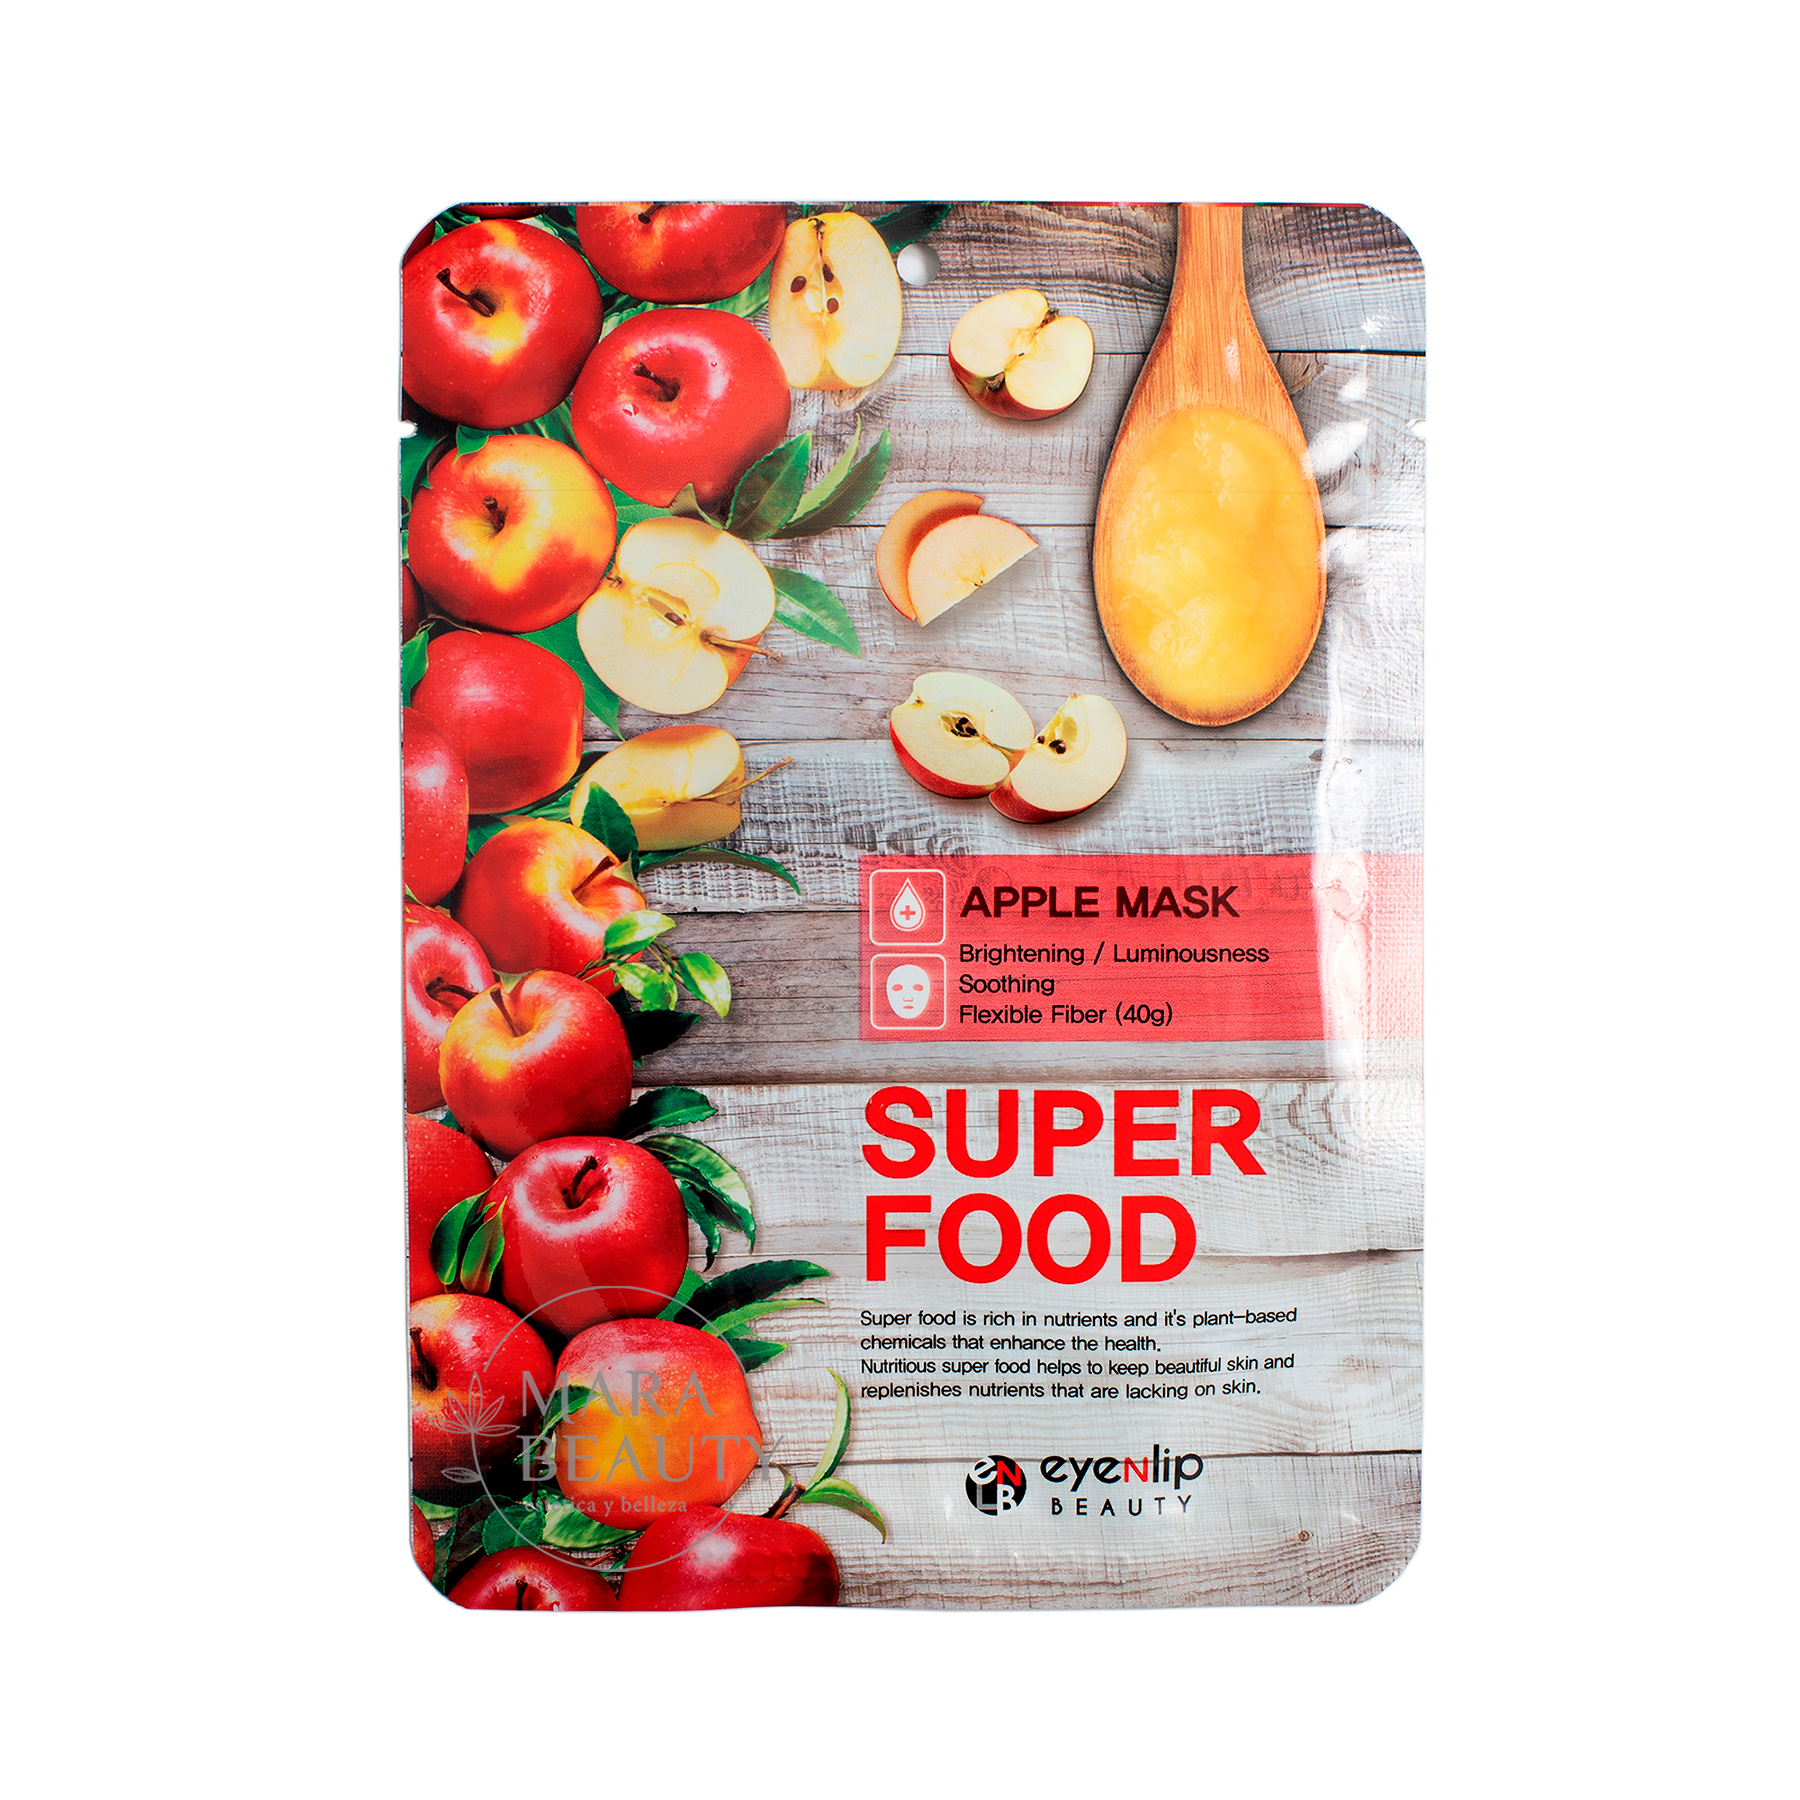 Mascarilla Apple SUPER FOOD Mask 23ml. Eyenlip